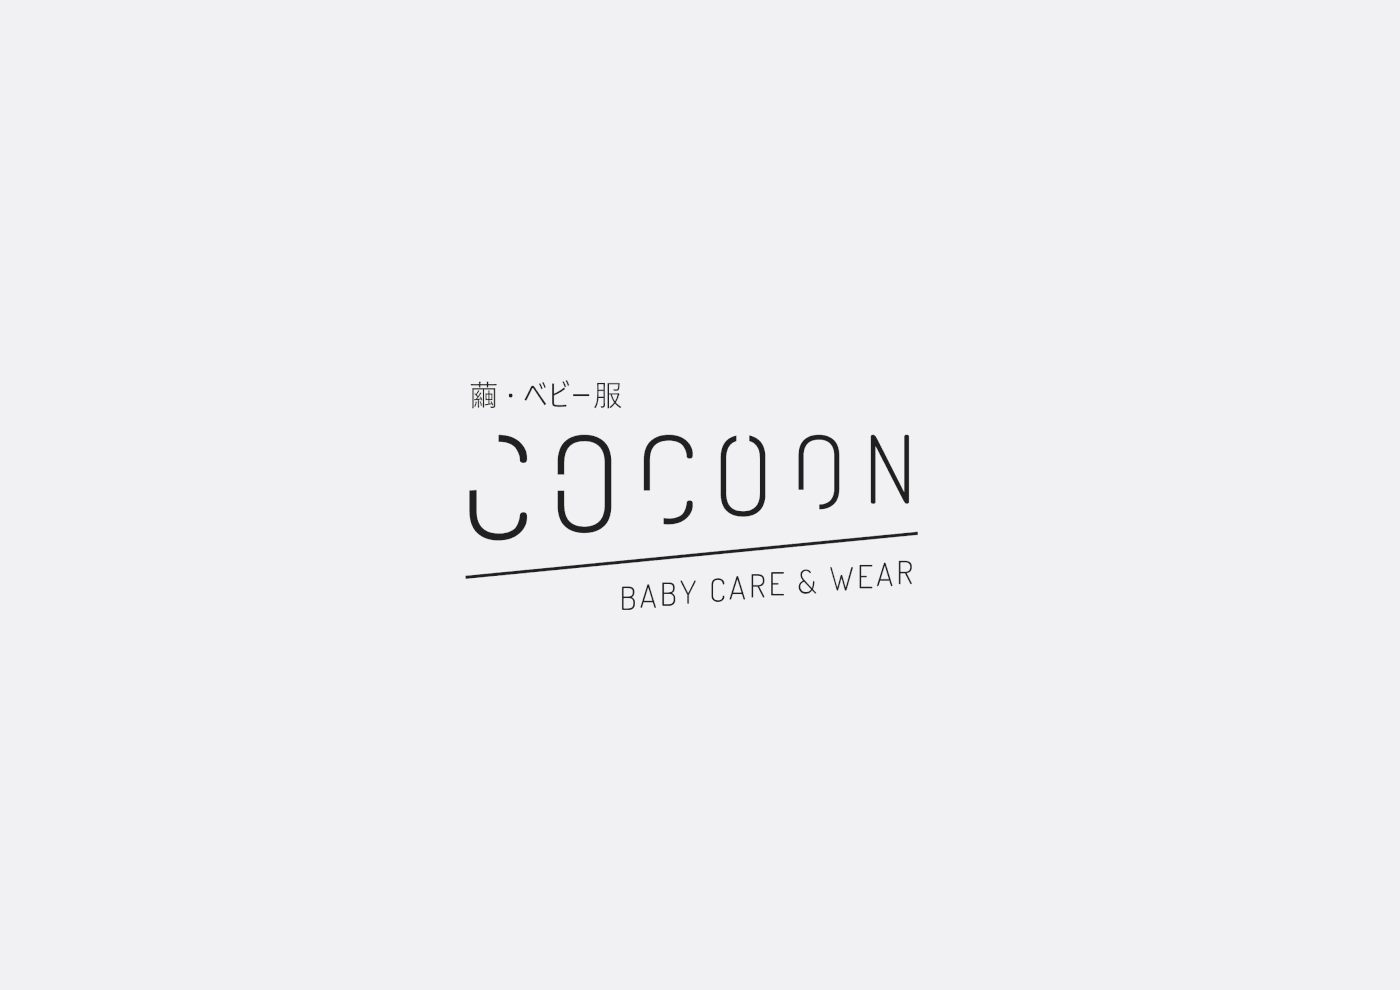 Cocoon婴儿护理和服装品牌视觉识别设计